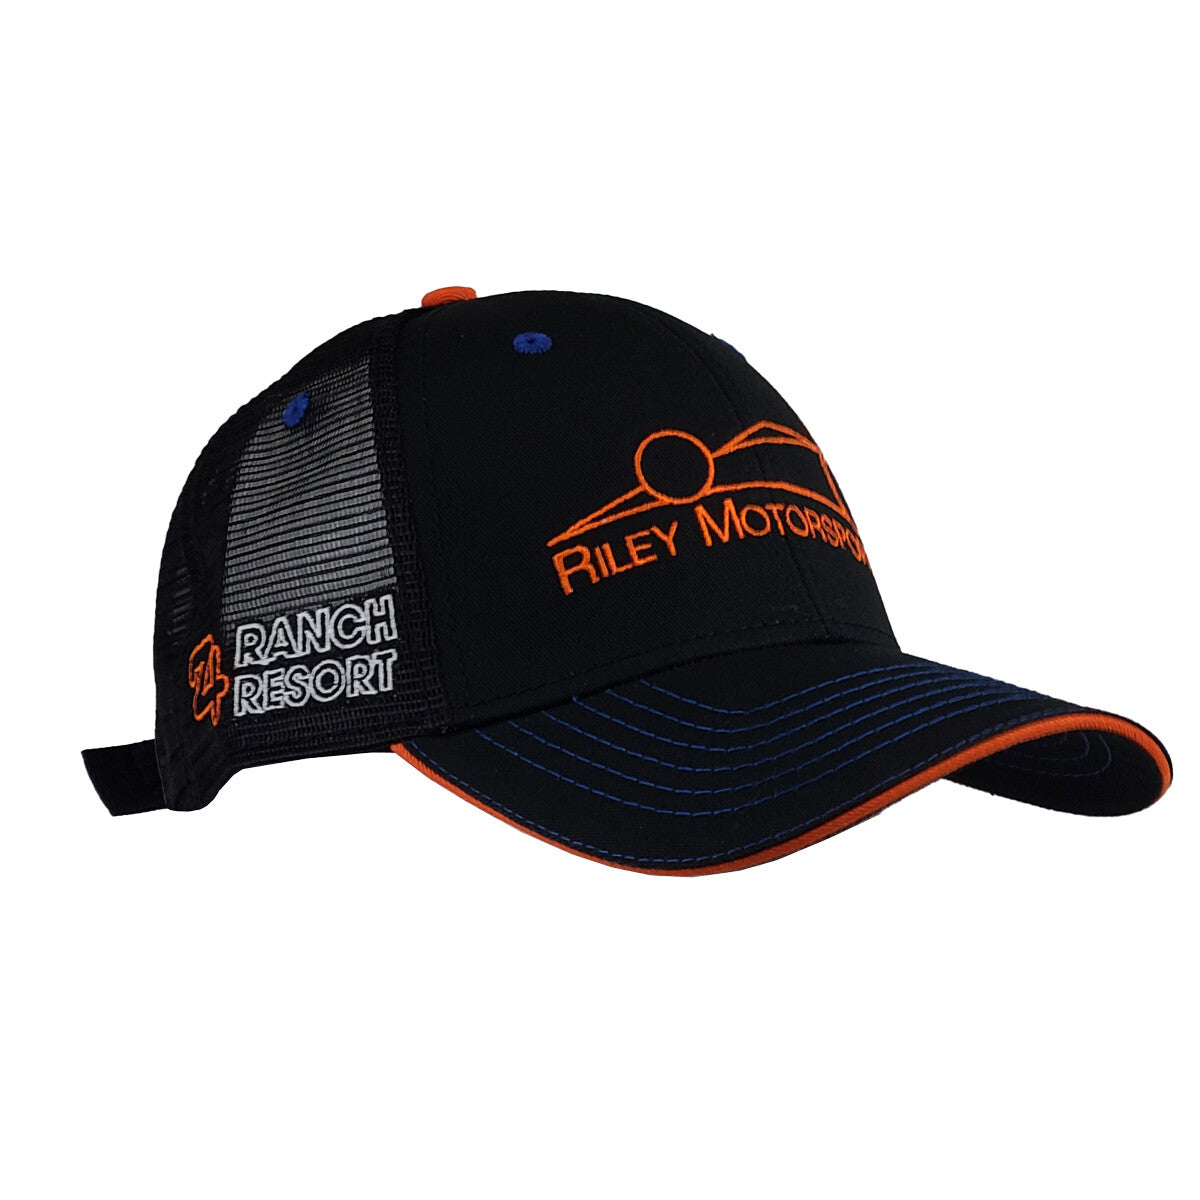 Riley MotorSports Hat - Black